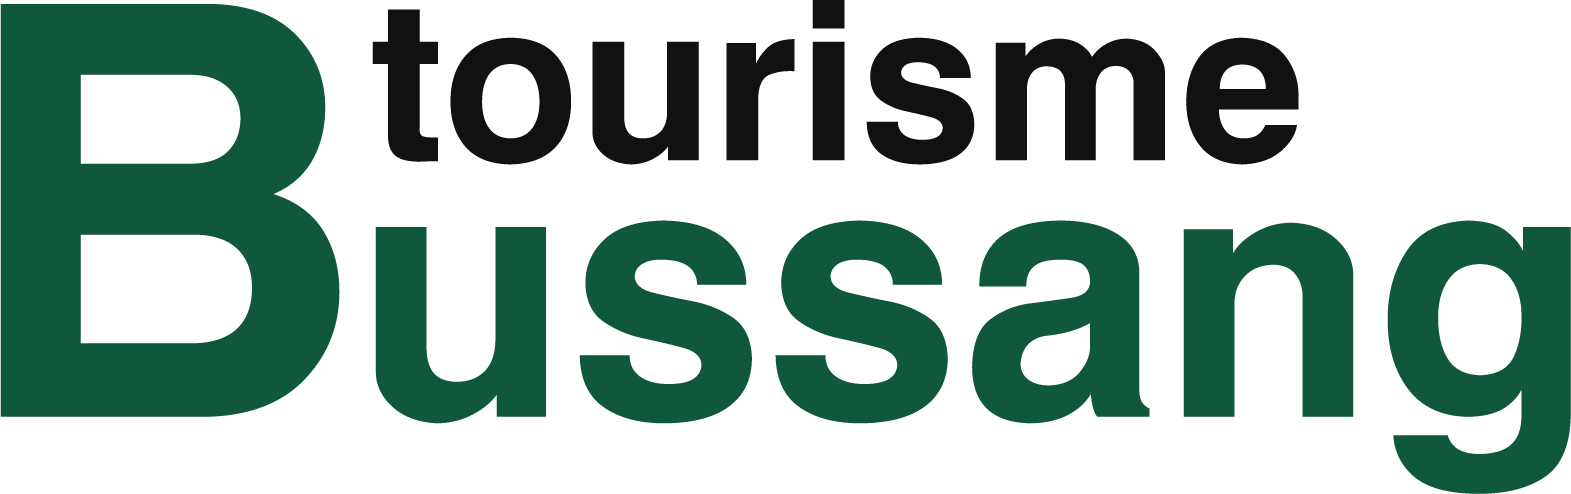 Logo Bussang Tourisme